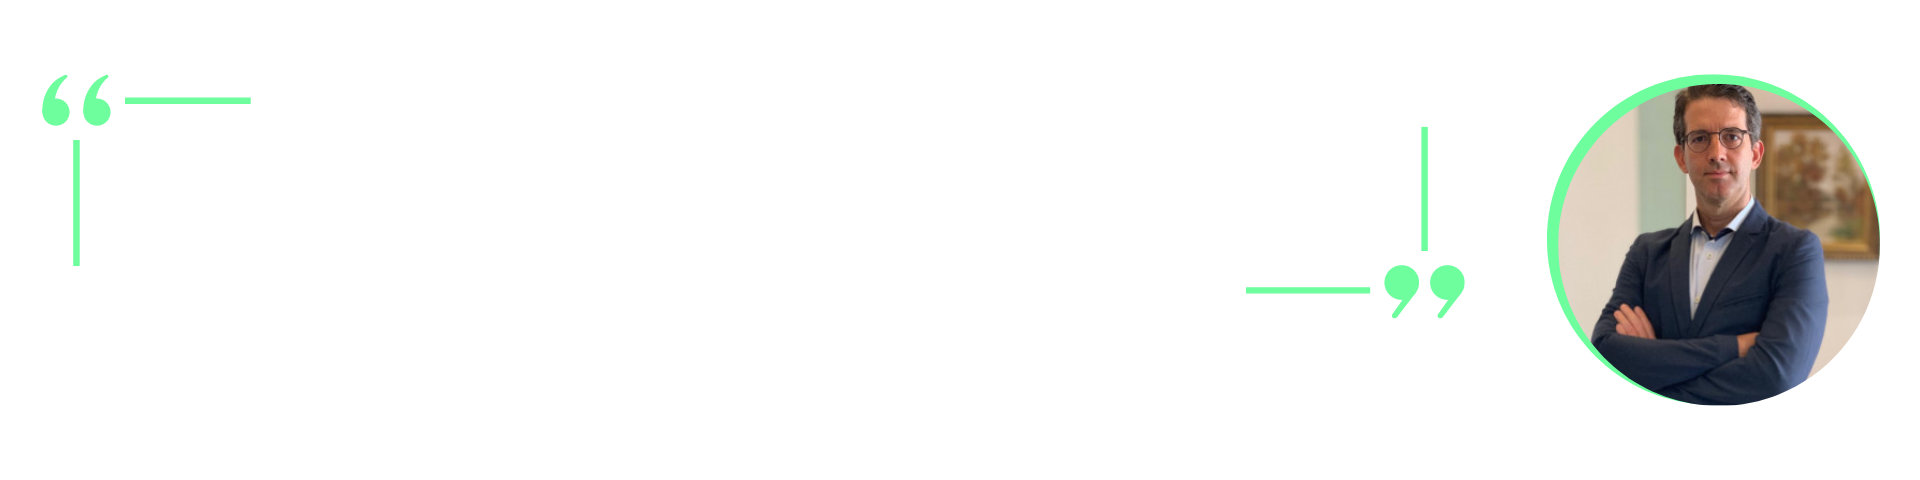 Doctor Francisco Montalverne's quotation: 